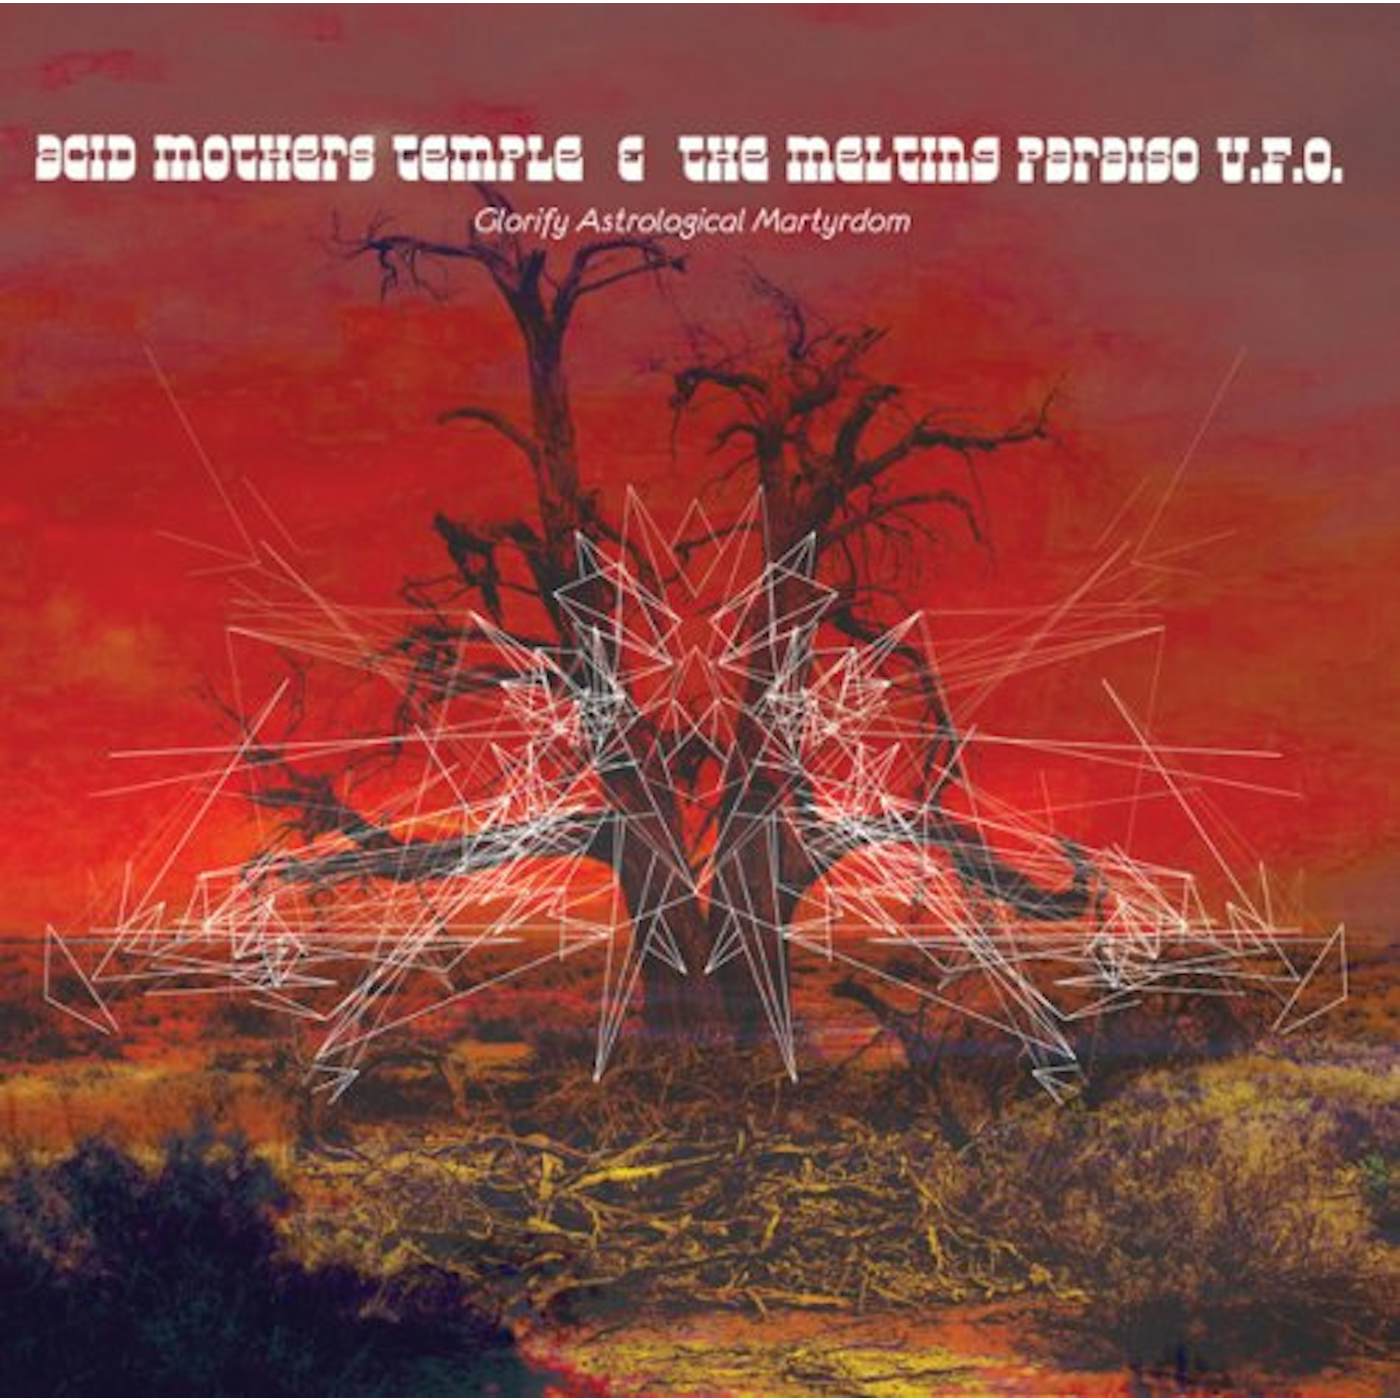 Acid Mothers Temple & Melting Paraiso U.F.O. GLORIFY ASTROLOGICAL MARTYRDOM CD